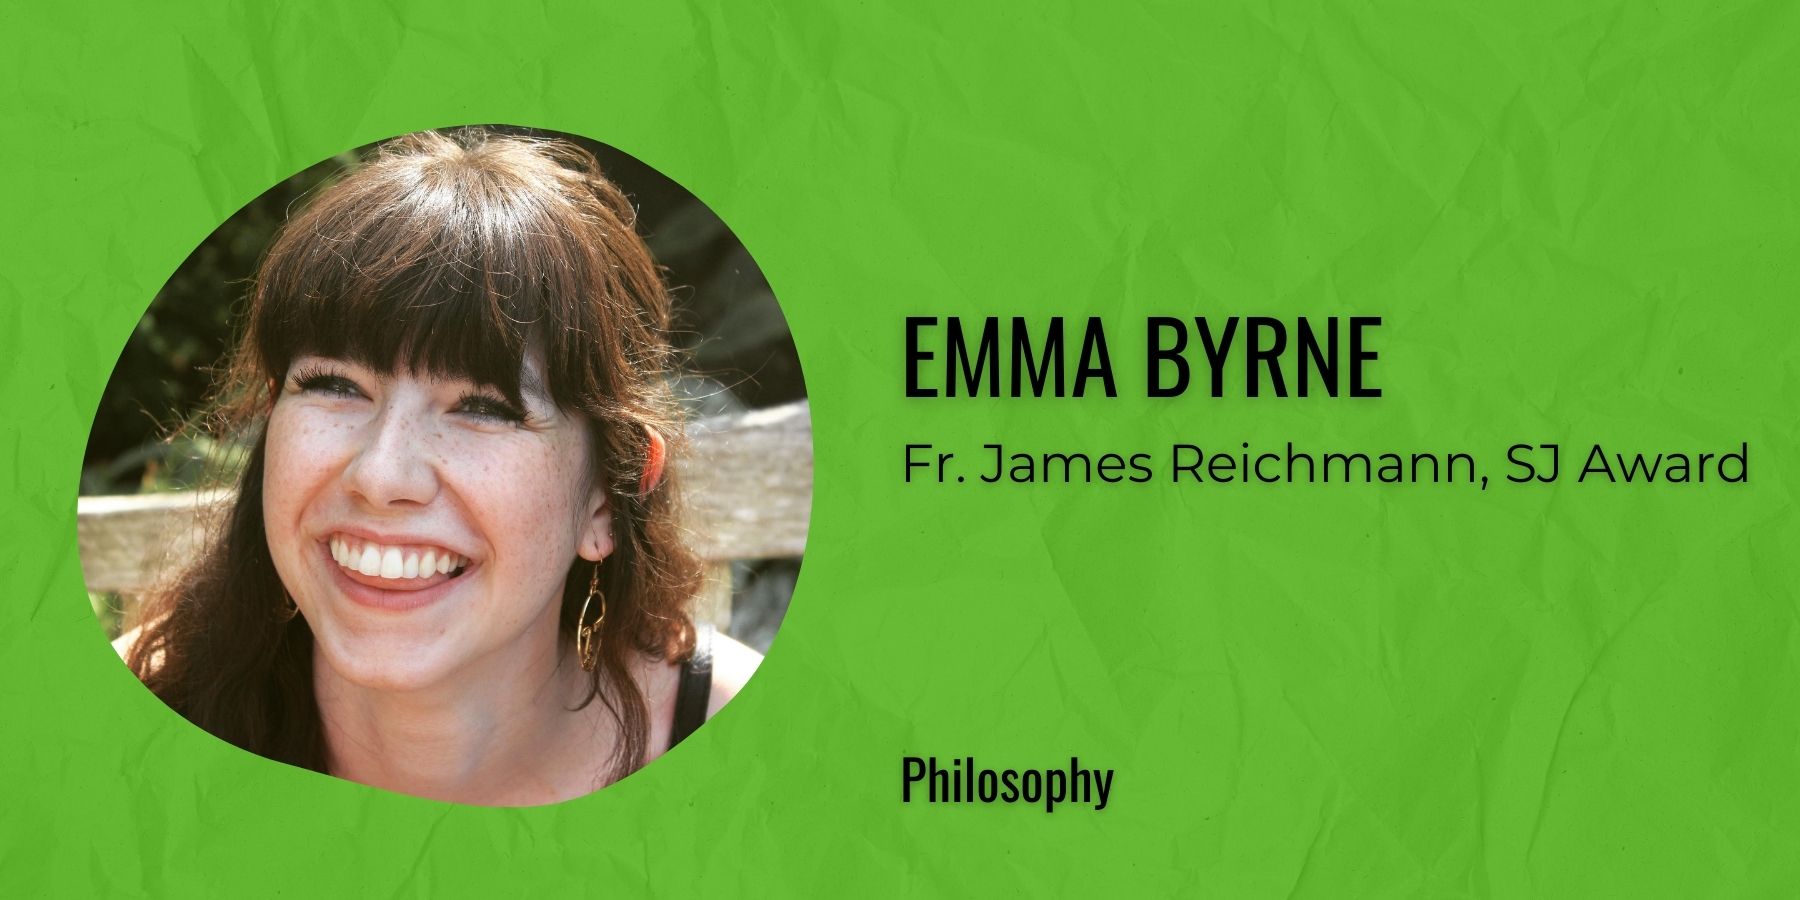 Image of Emma Byrne with text: Fr. James Reichmann, SJ Award, Philosophy
